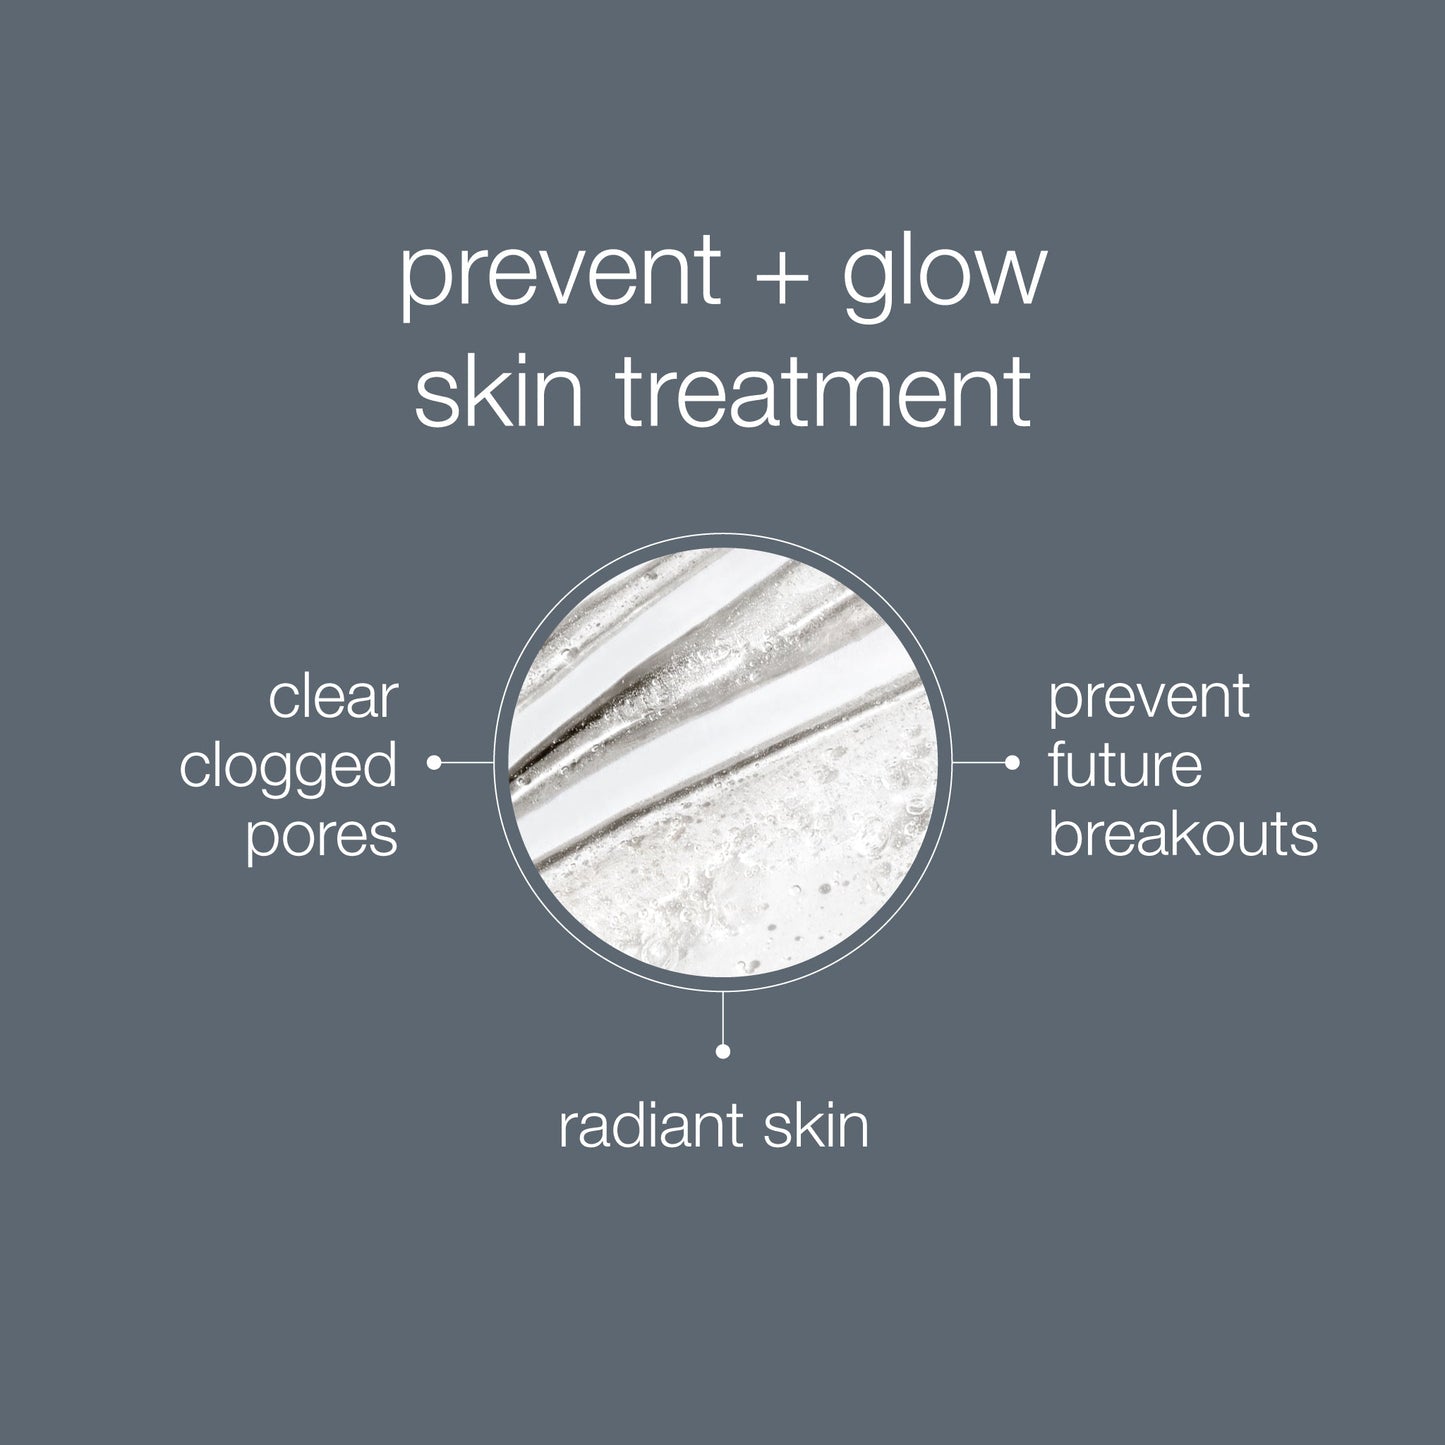 prevent + glow treatment benefits